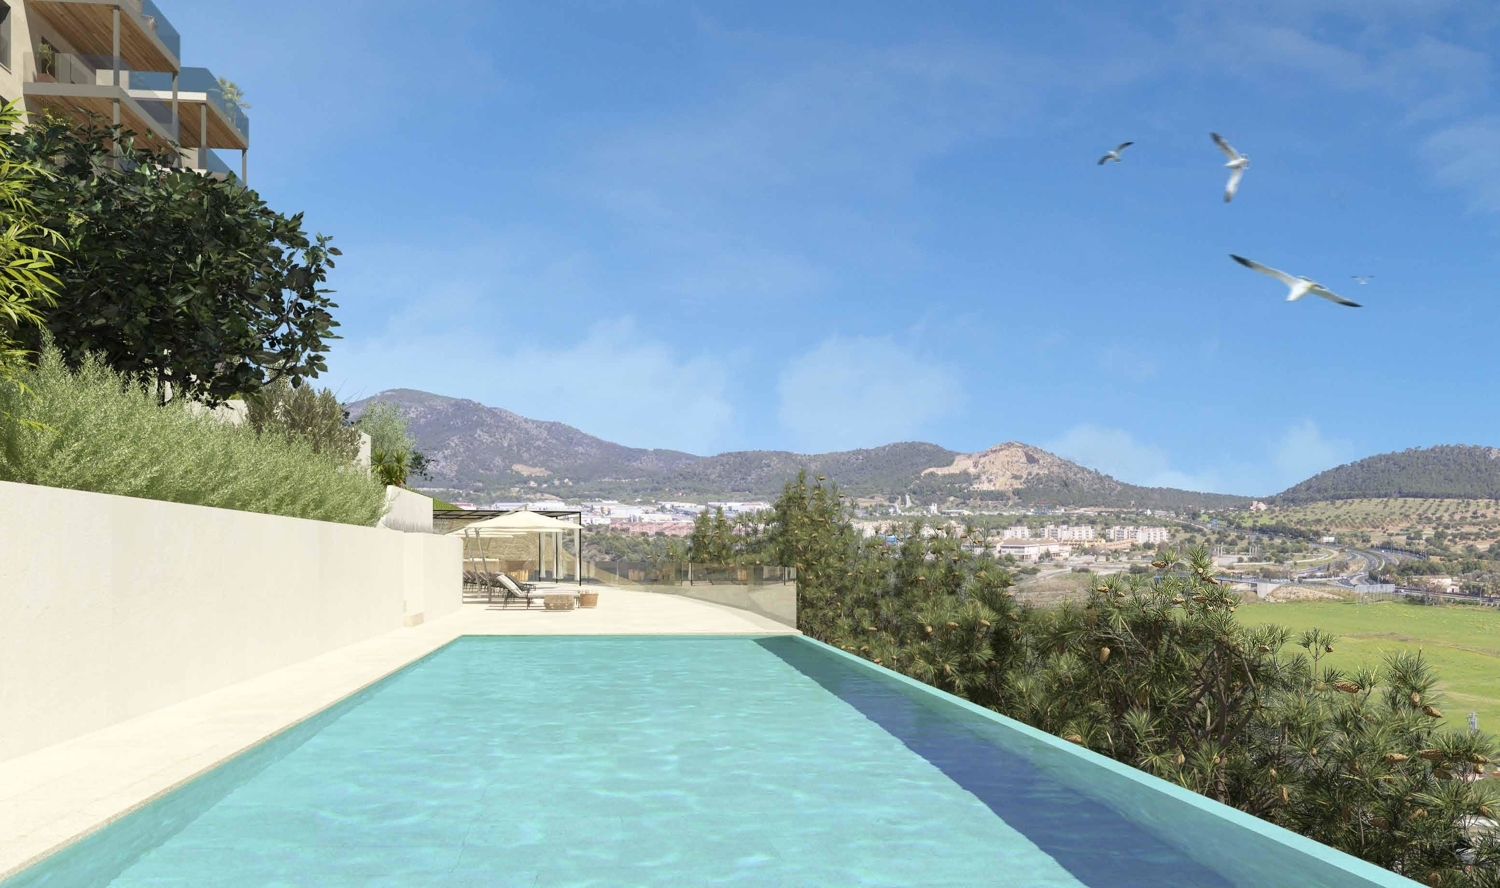 Flat with private terrace & community pool in Santa Ponça